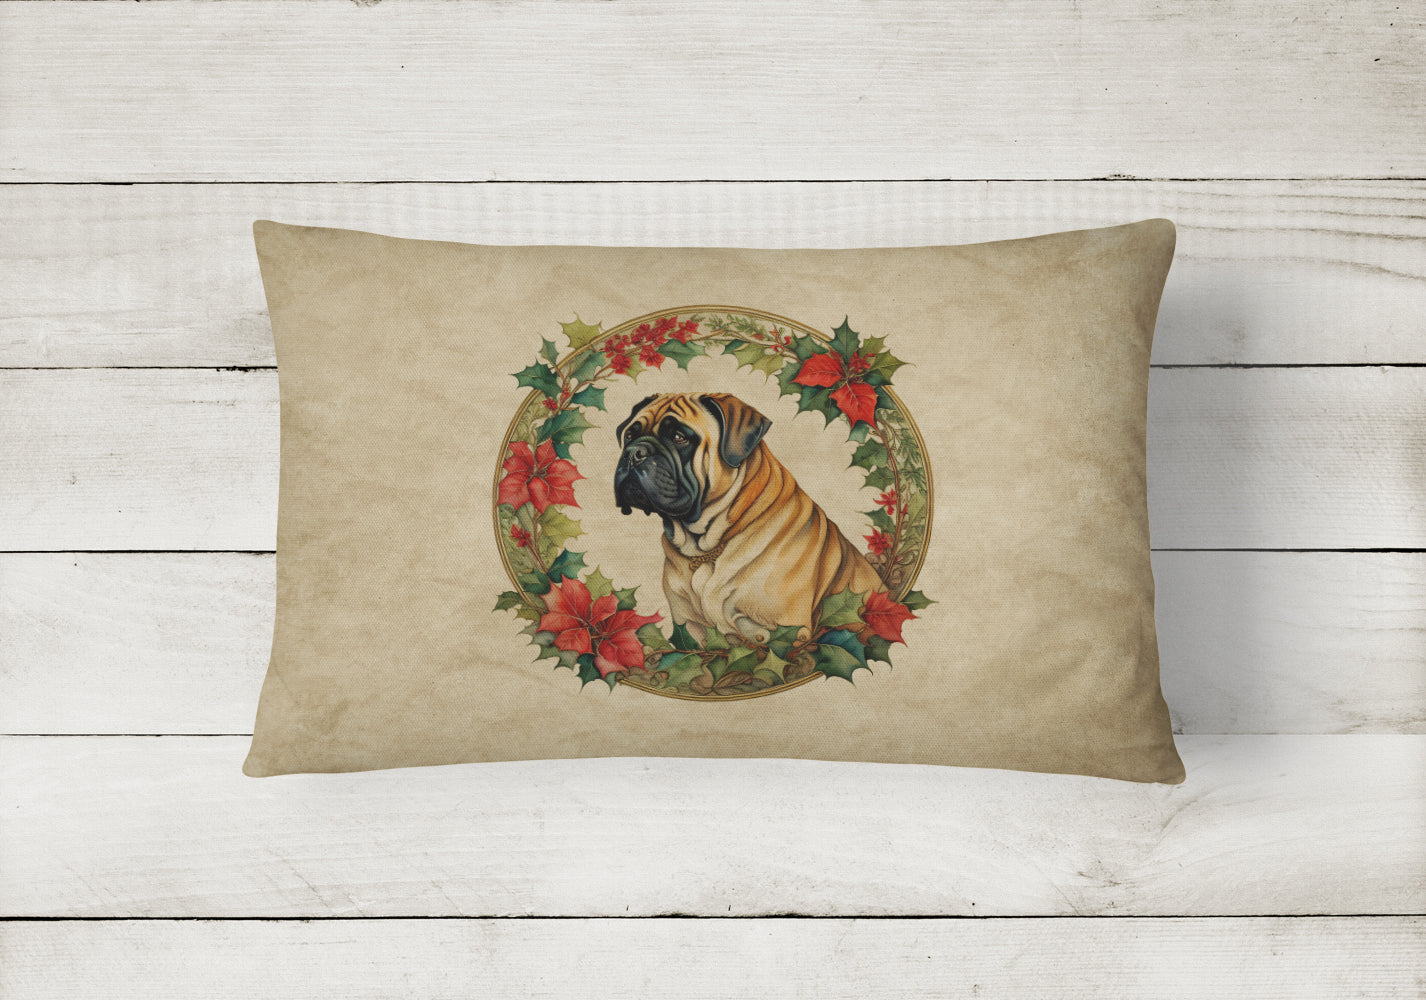 Buy this Mastiff Christmas Flowers Throw Pillow